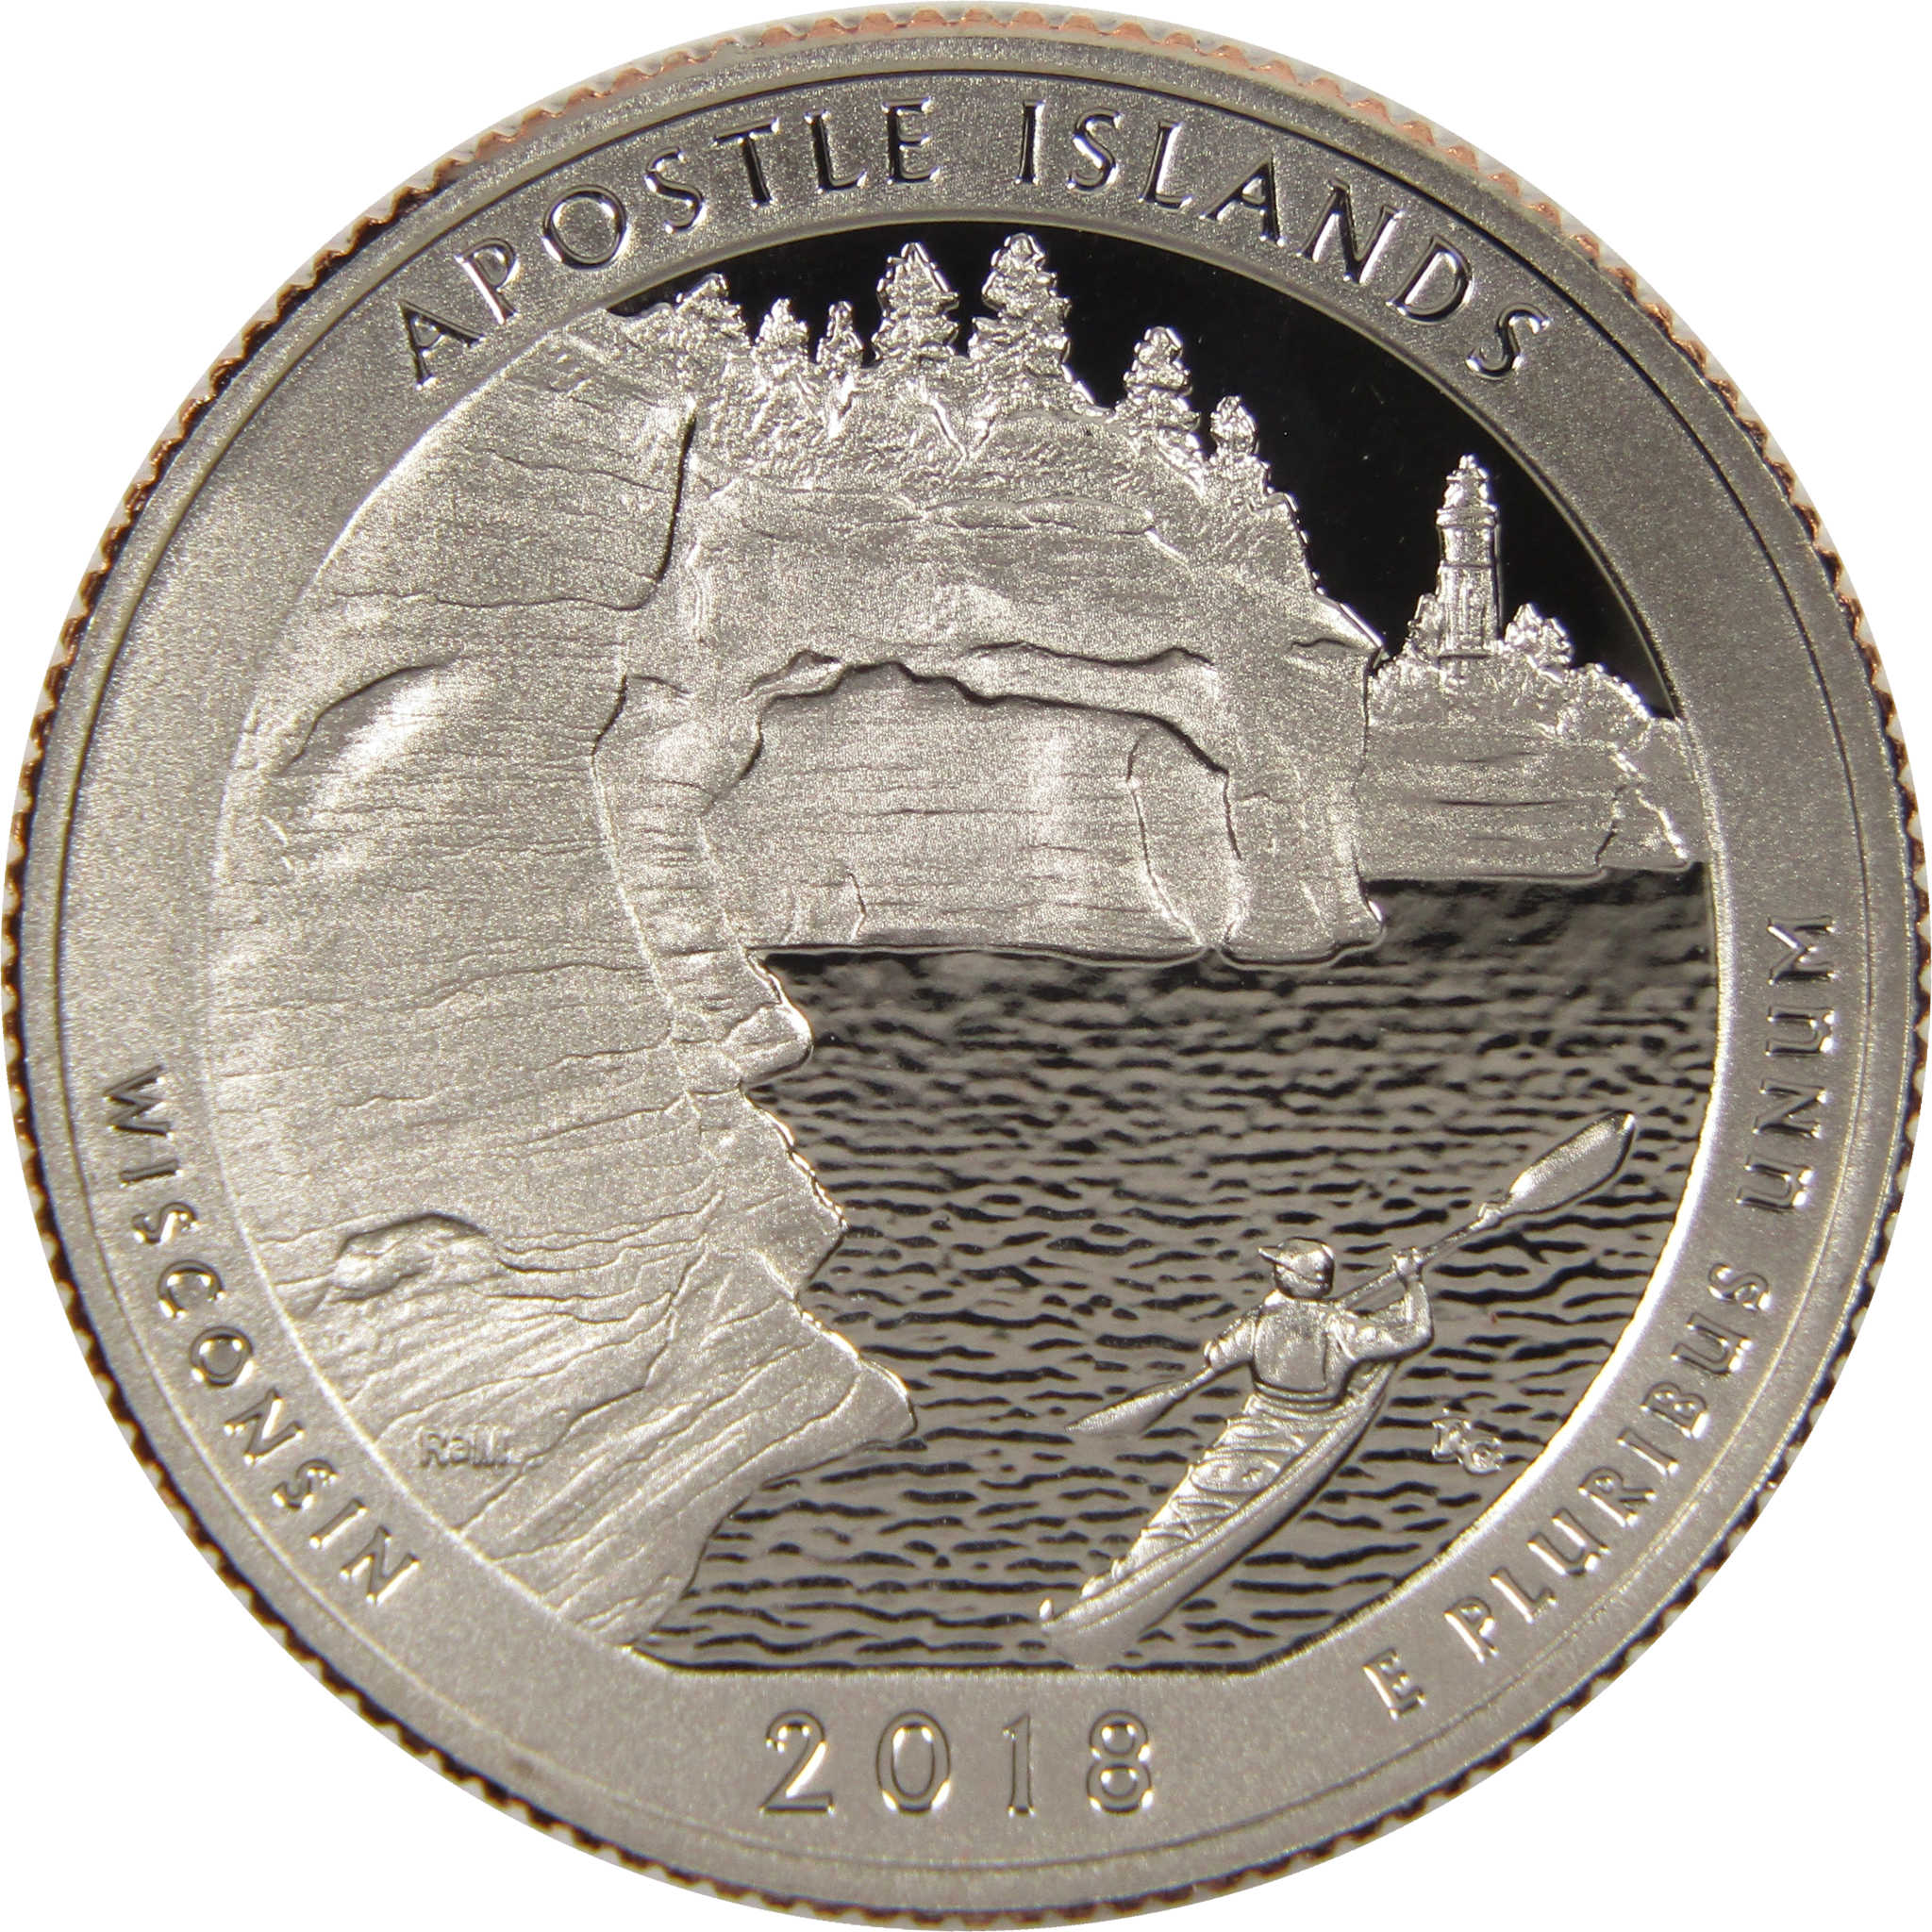 2018 S Apostle Islands NL National Park Quarter Choice Proof Clad Coin